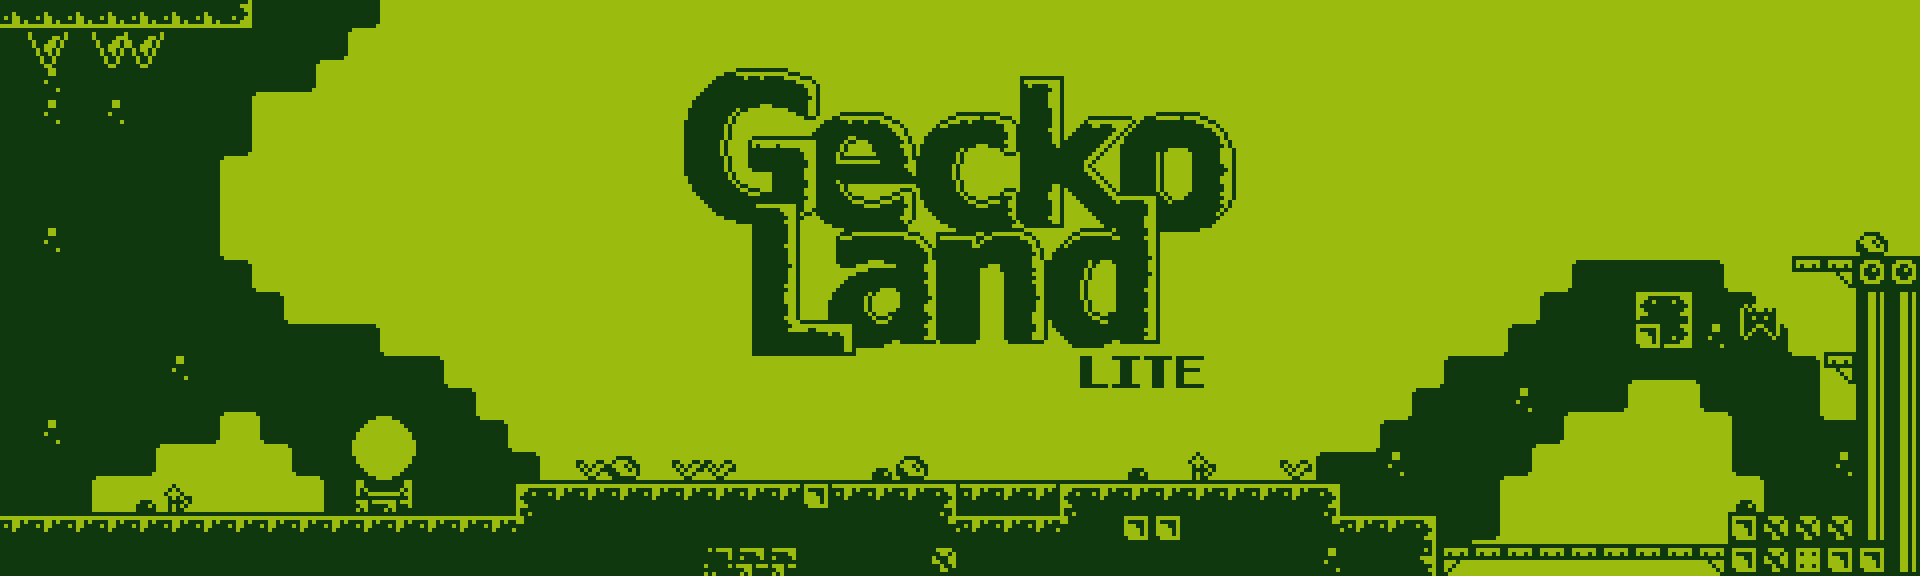 Gecko Land Lite